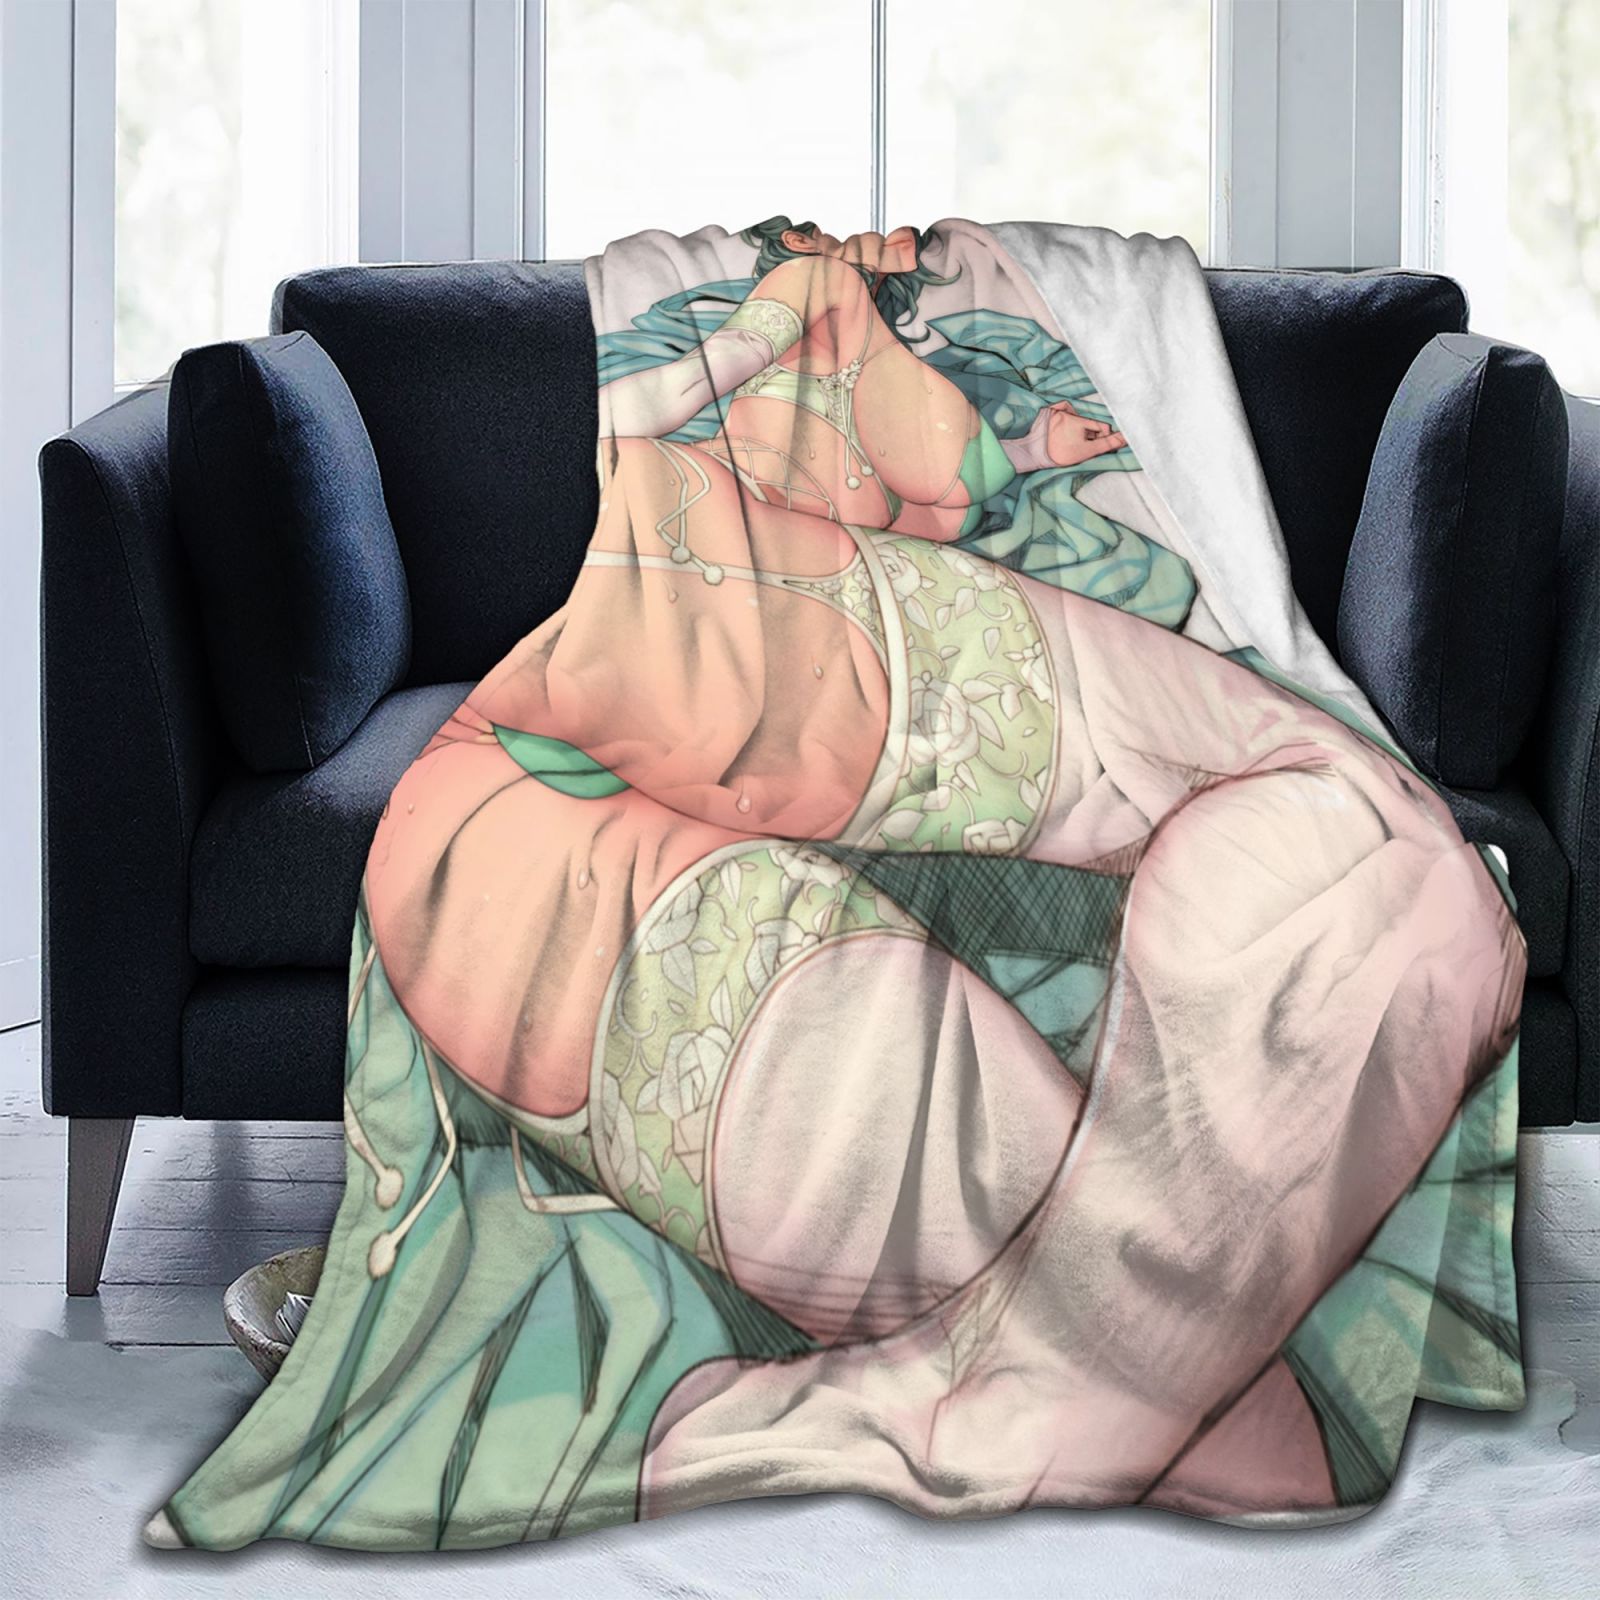 MAOKEI - Ecchi New Anime Character Blanket 2 - 1005003588668701-Blanket-200x150cm